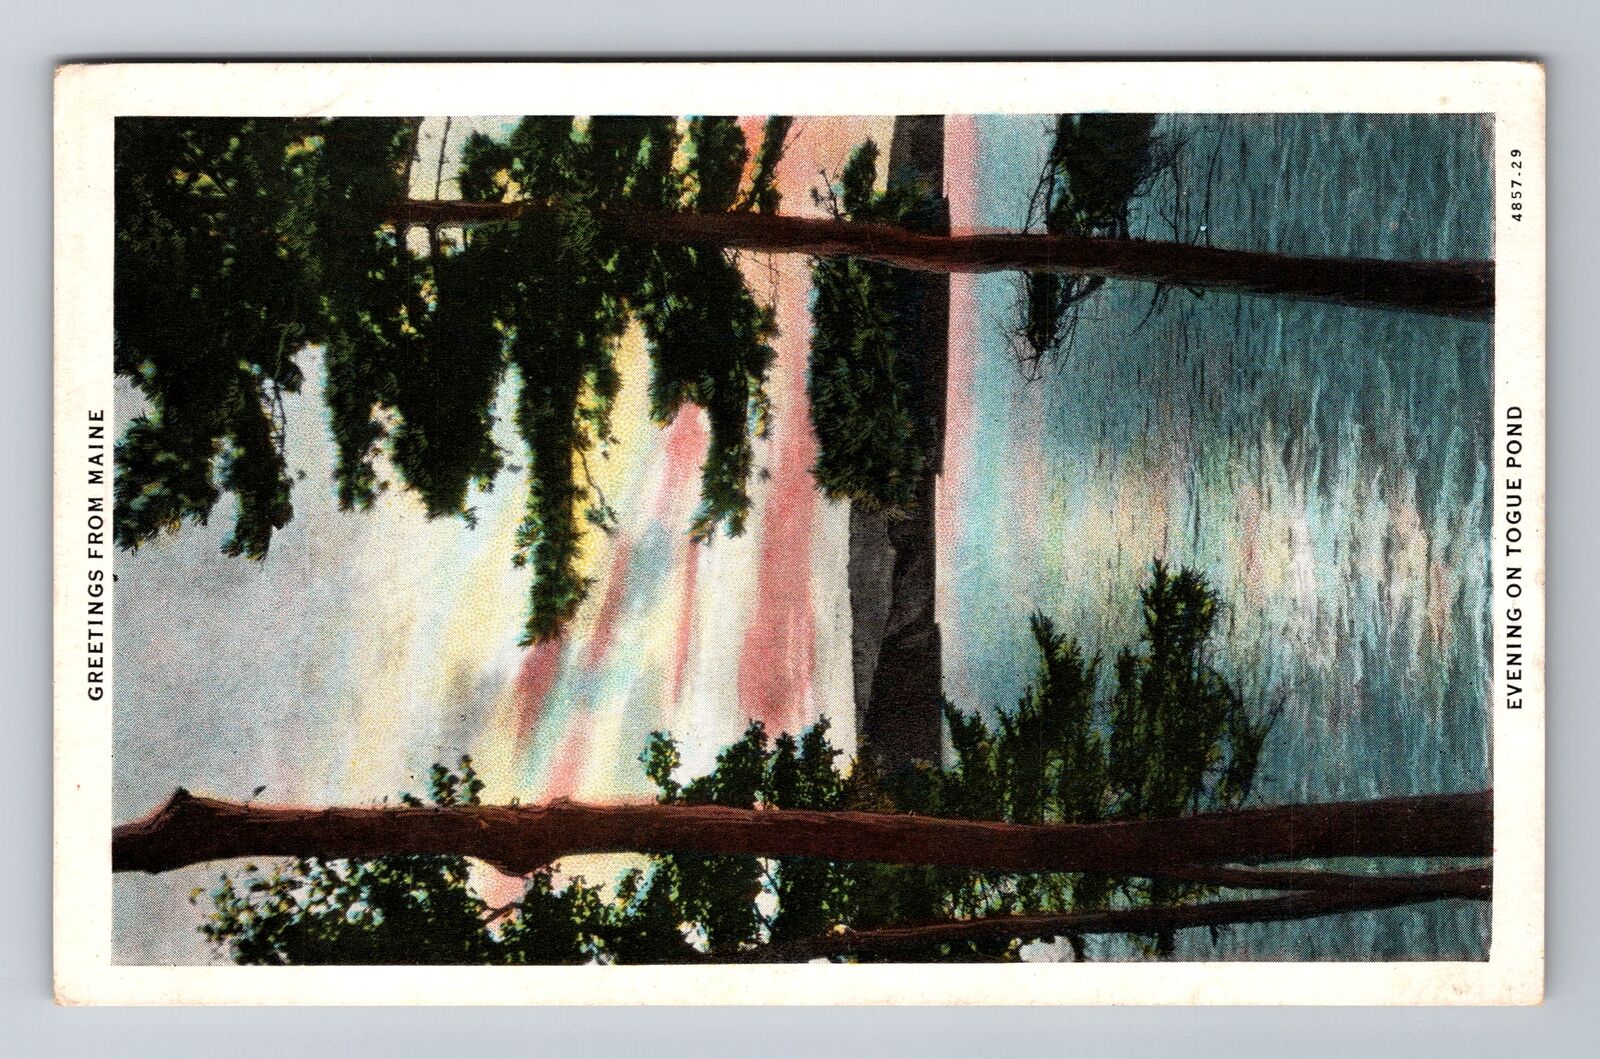 Togue Pond ME-Maine, Evening on Togue Pond, Greetings, Vintage Souvenir Postcard